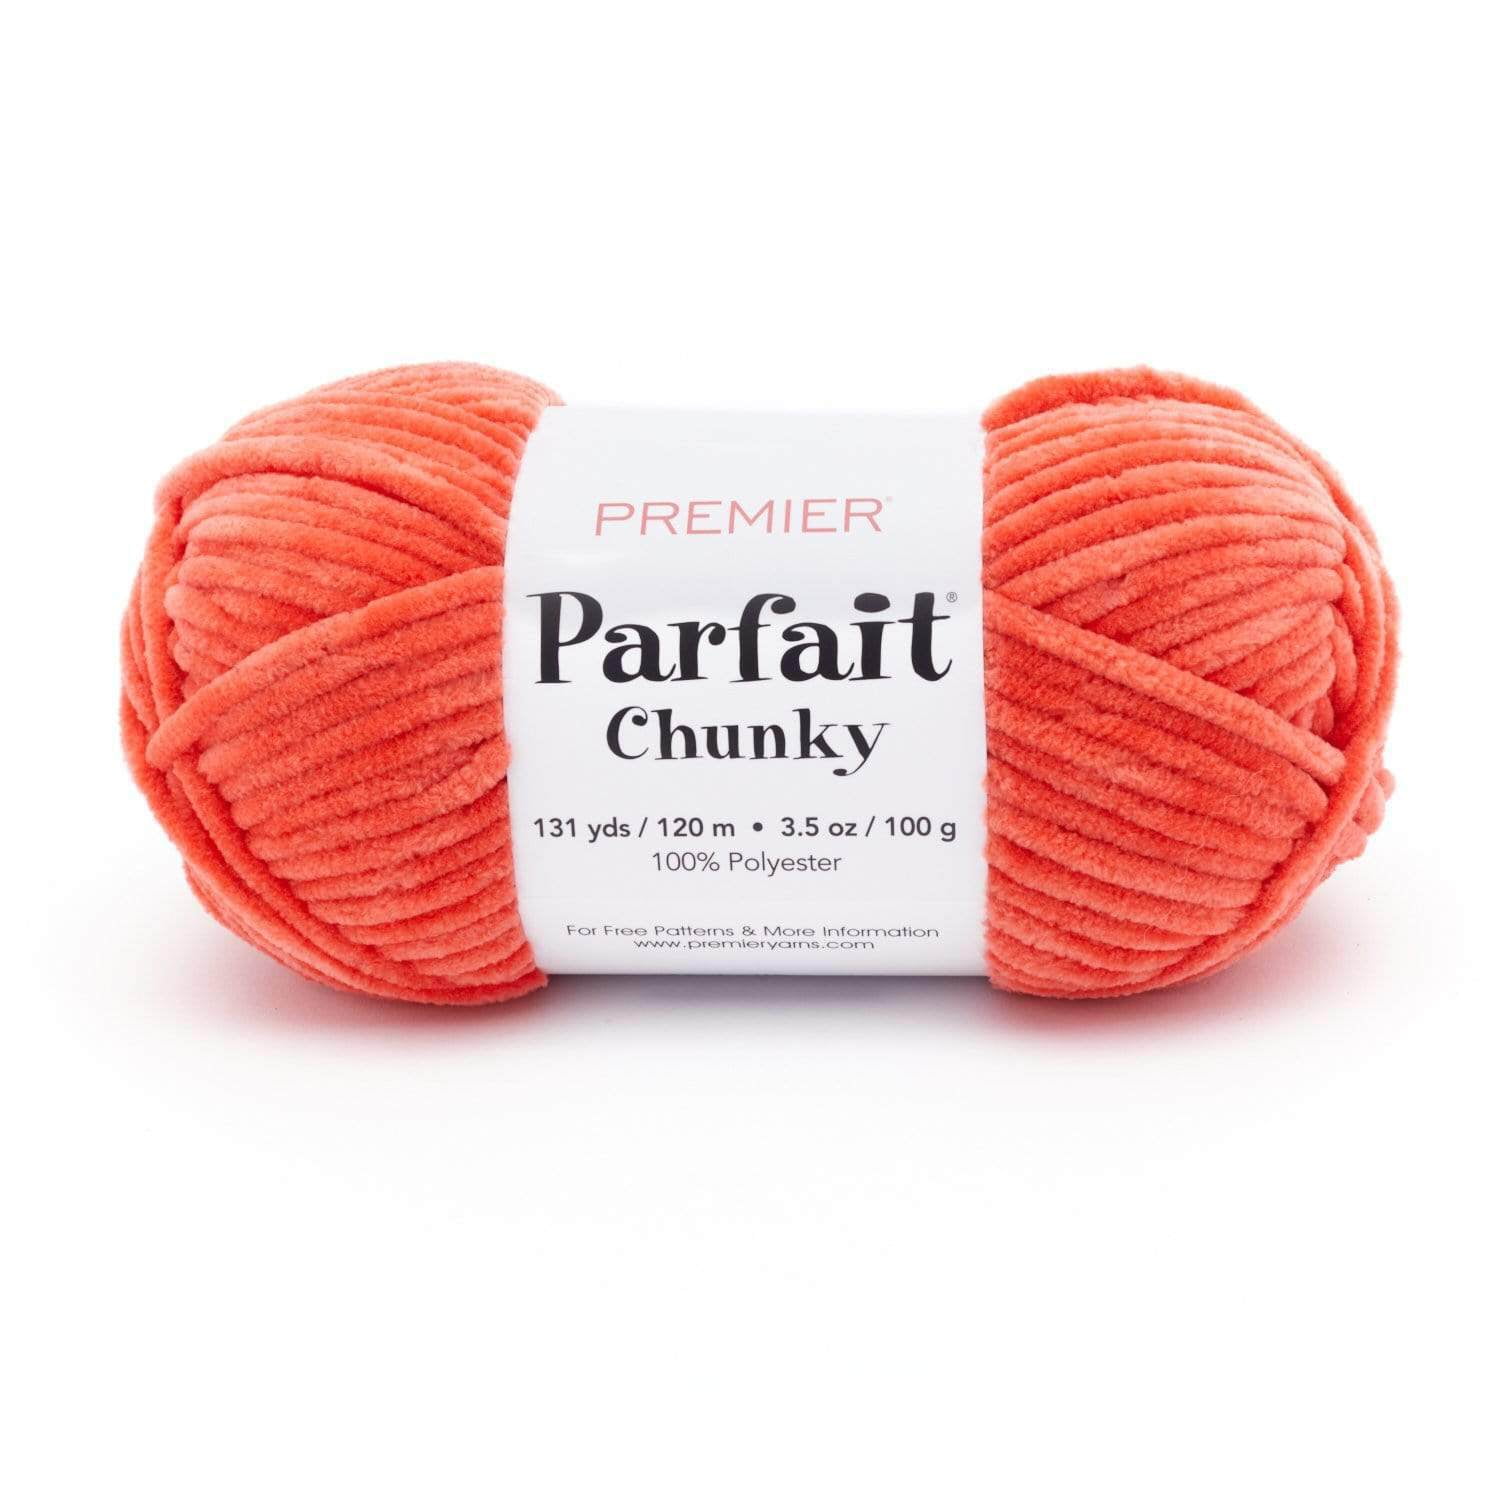 Premier Parfait Chunky Yarn Review — Summerbug Crafts